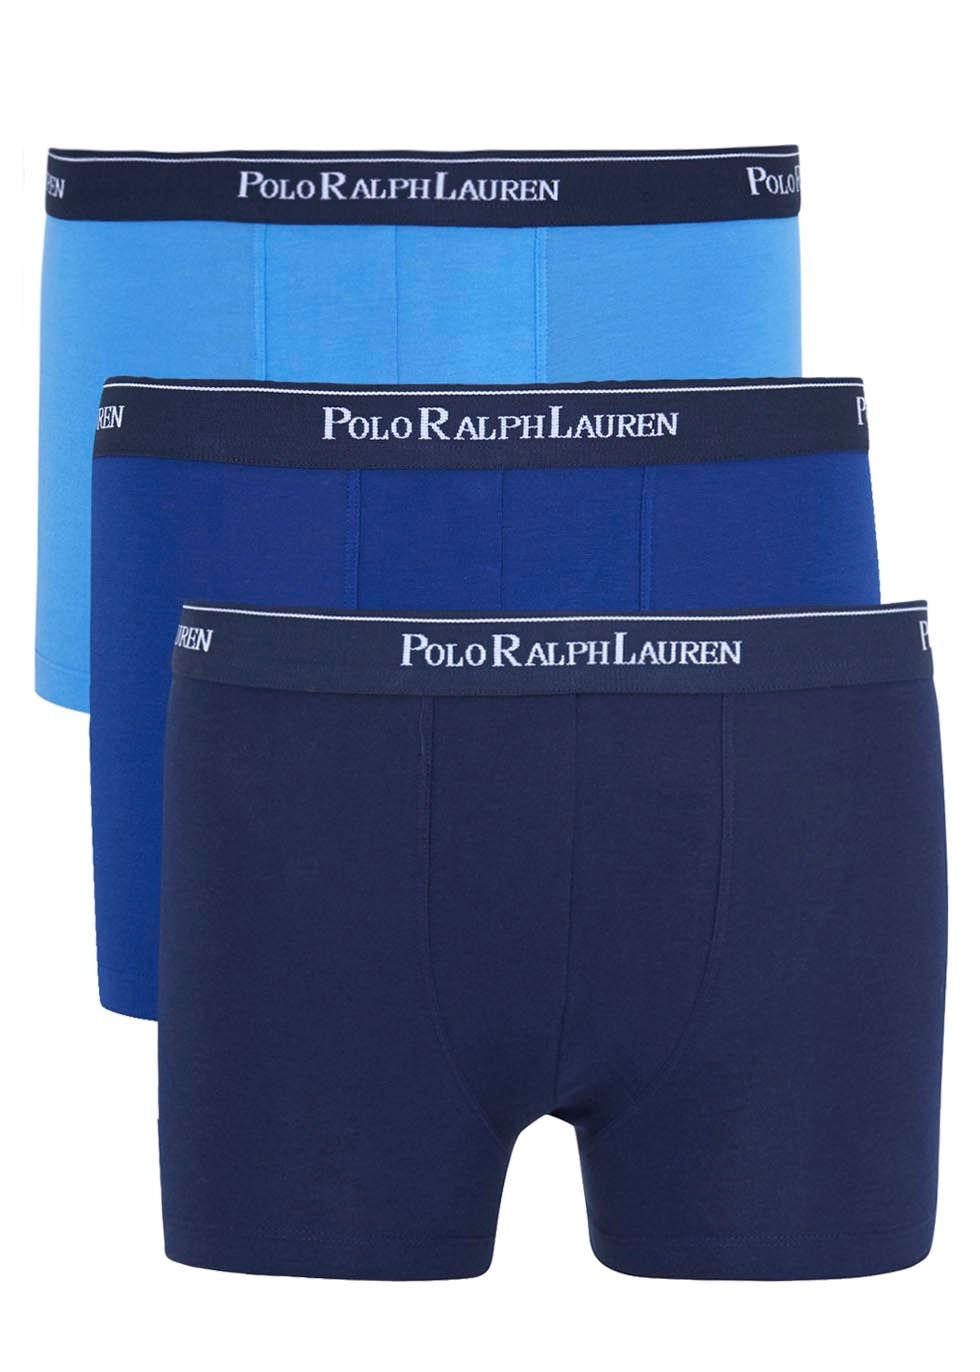 Polo Ralph Lauren Blue stretch cotton boxer briefs - set of three ...